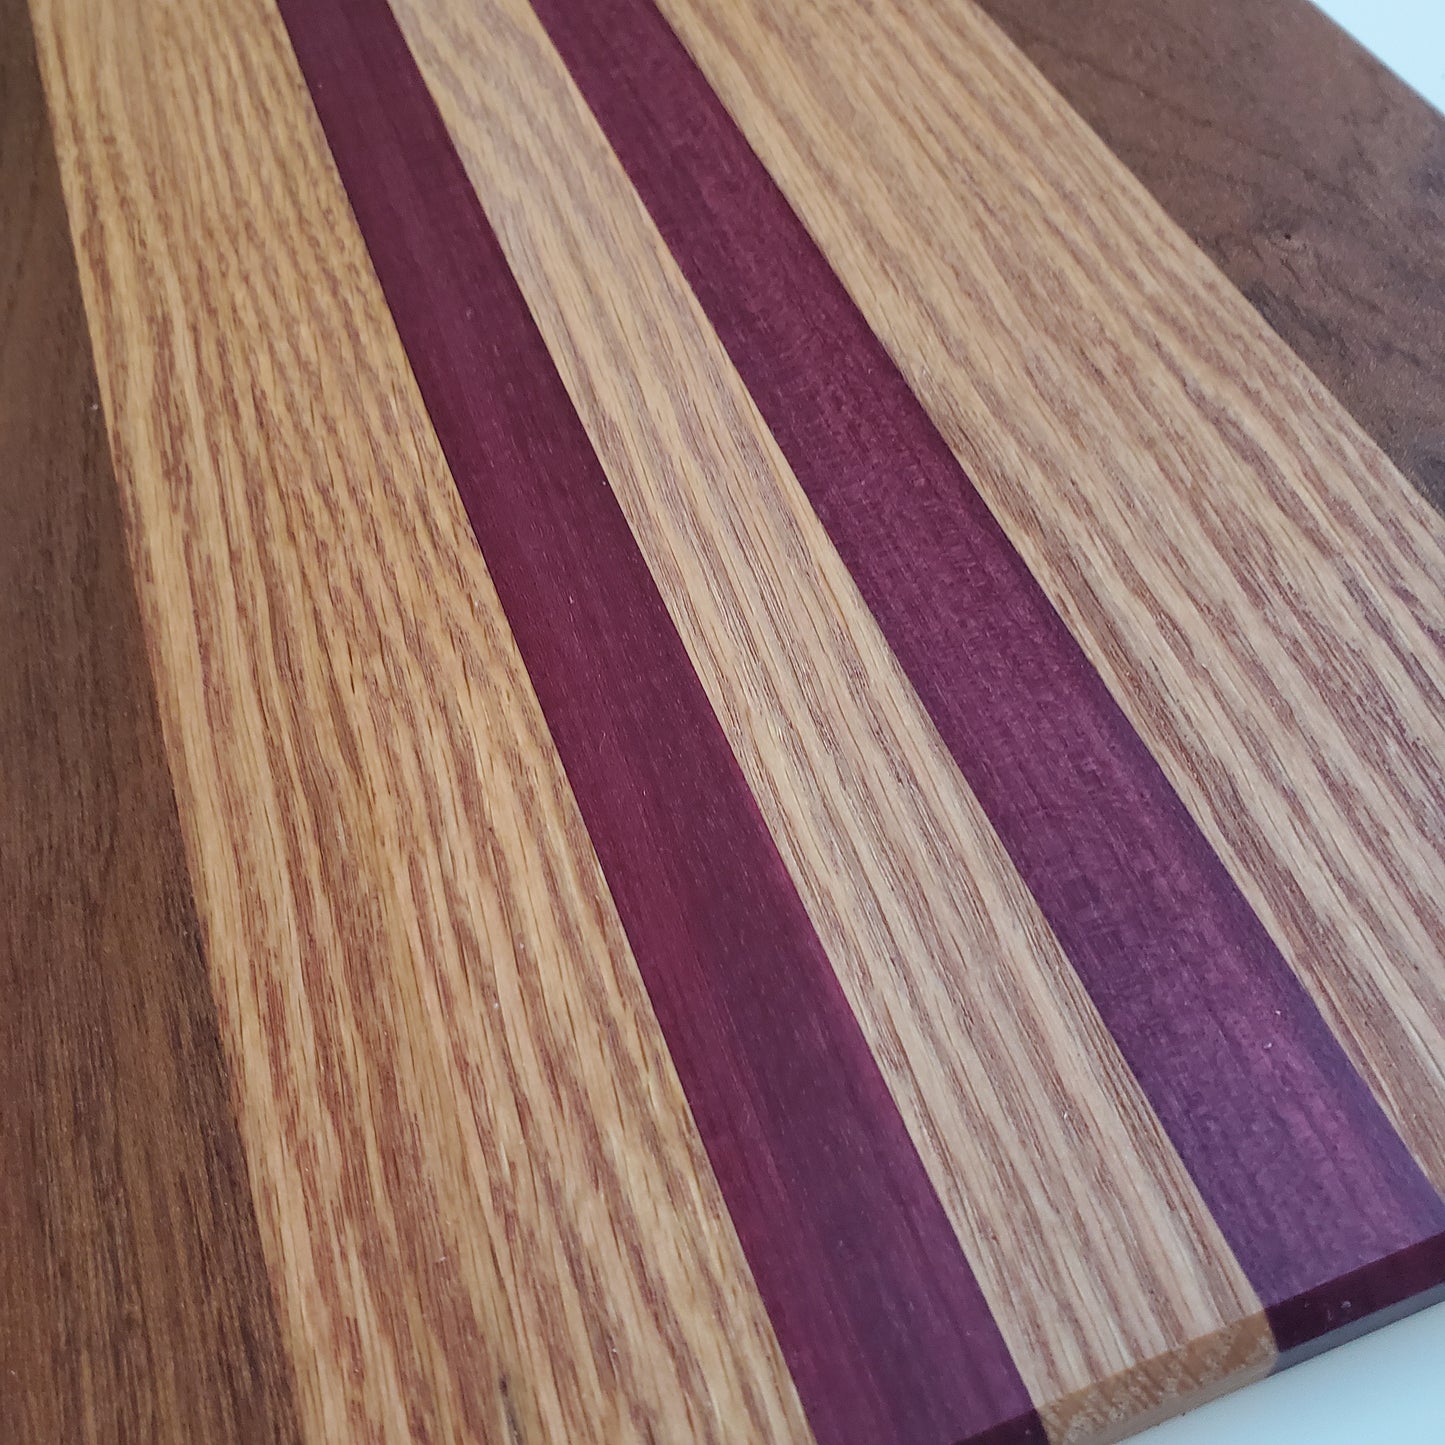 Solid Hardwood Charcuterie Board